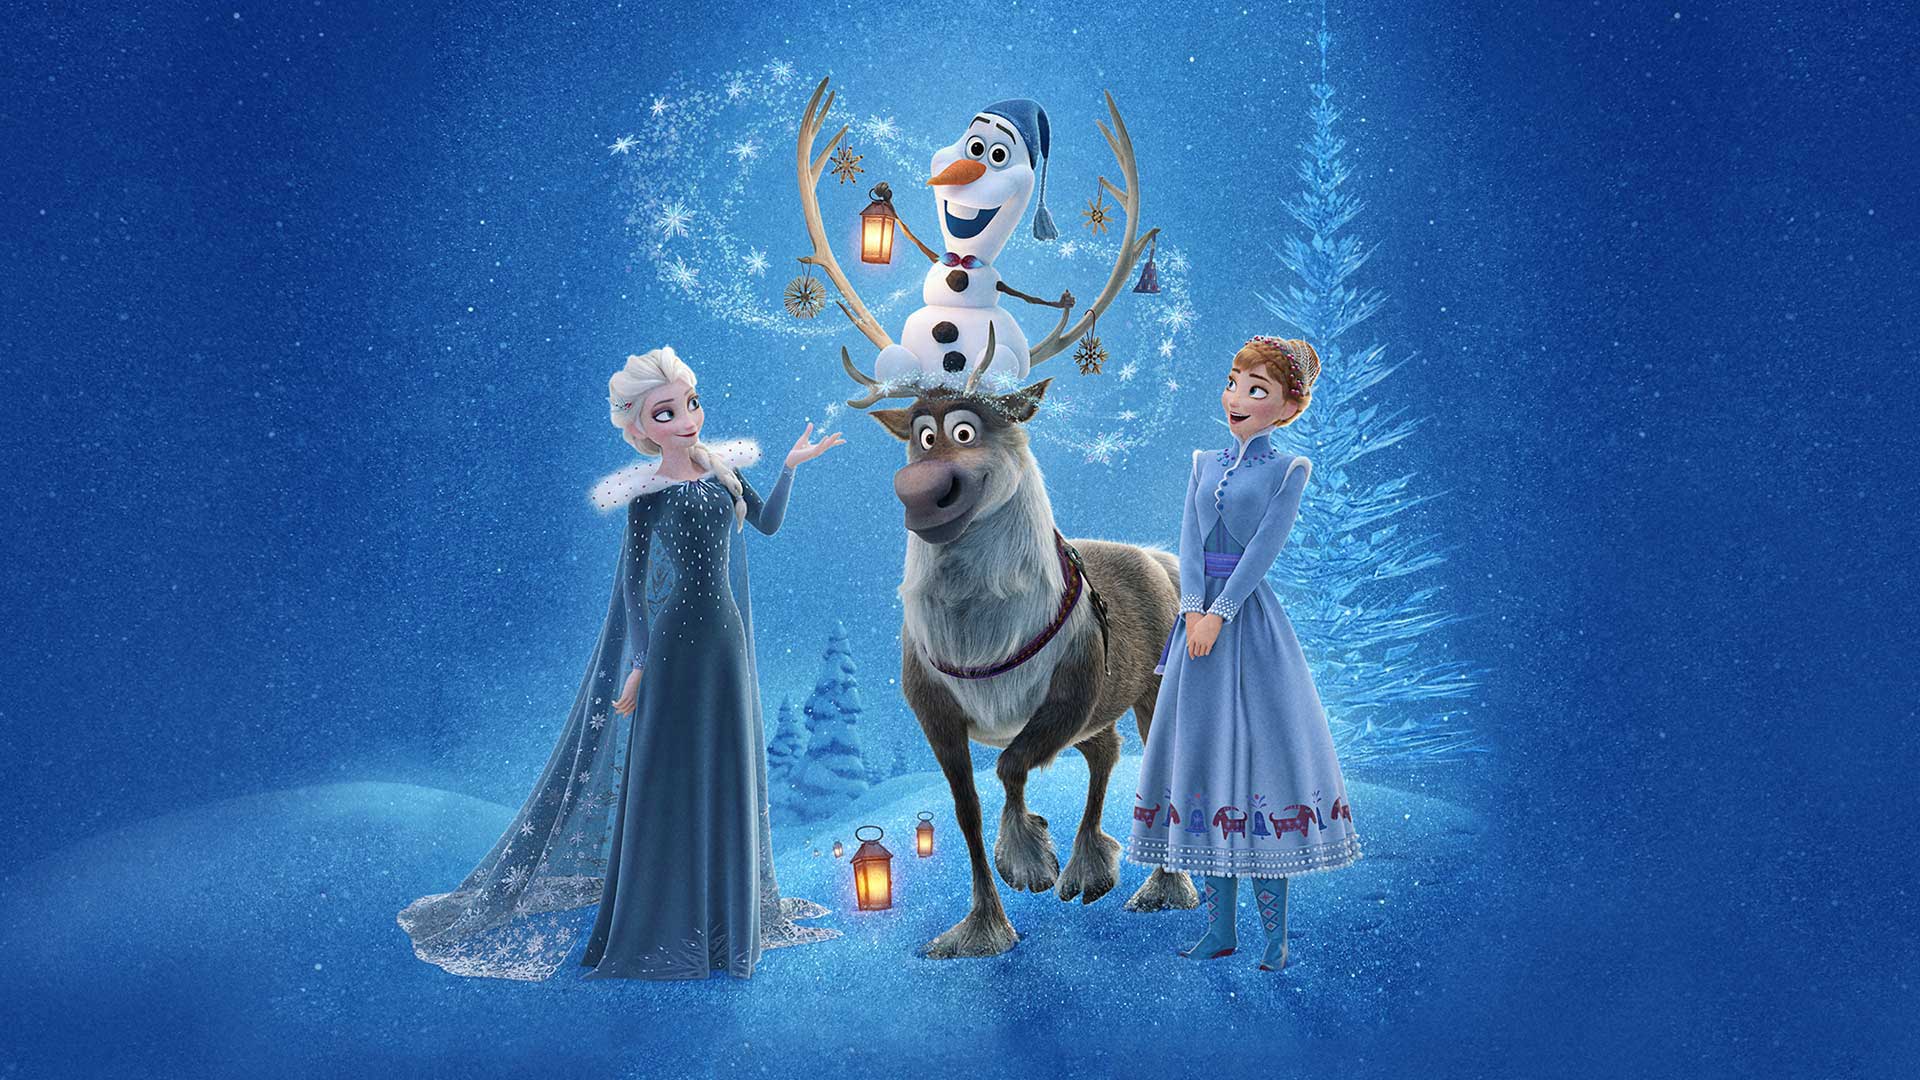 Download Olaf’s Frozen Adventure (2017) Dual Audio (Hindi-English) 480p [120MB] || 720p [260MB]